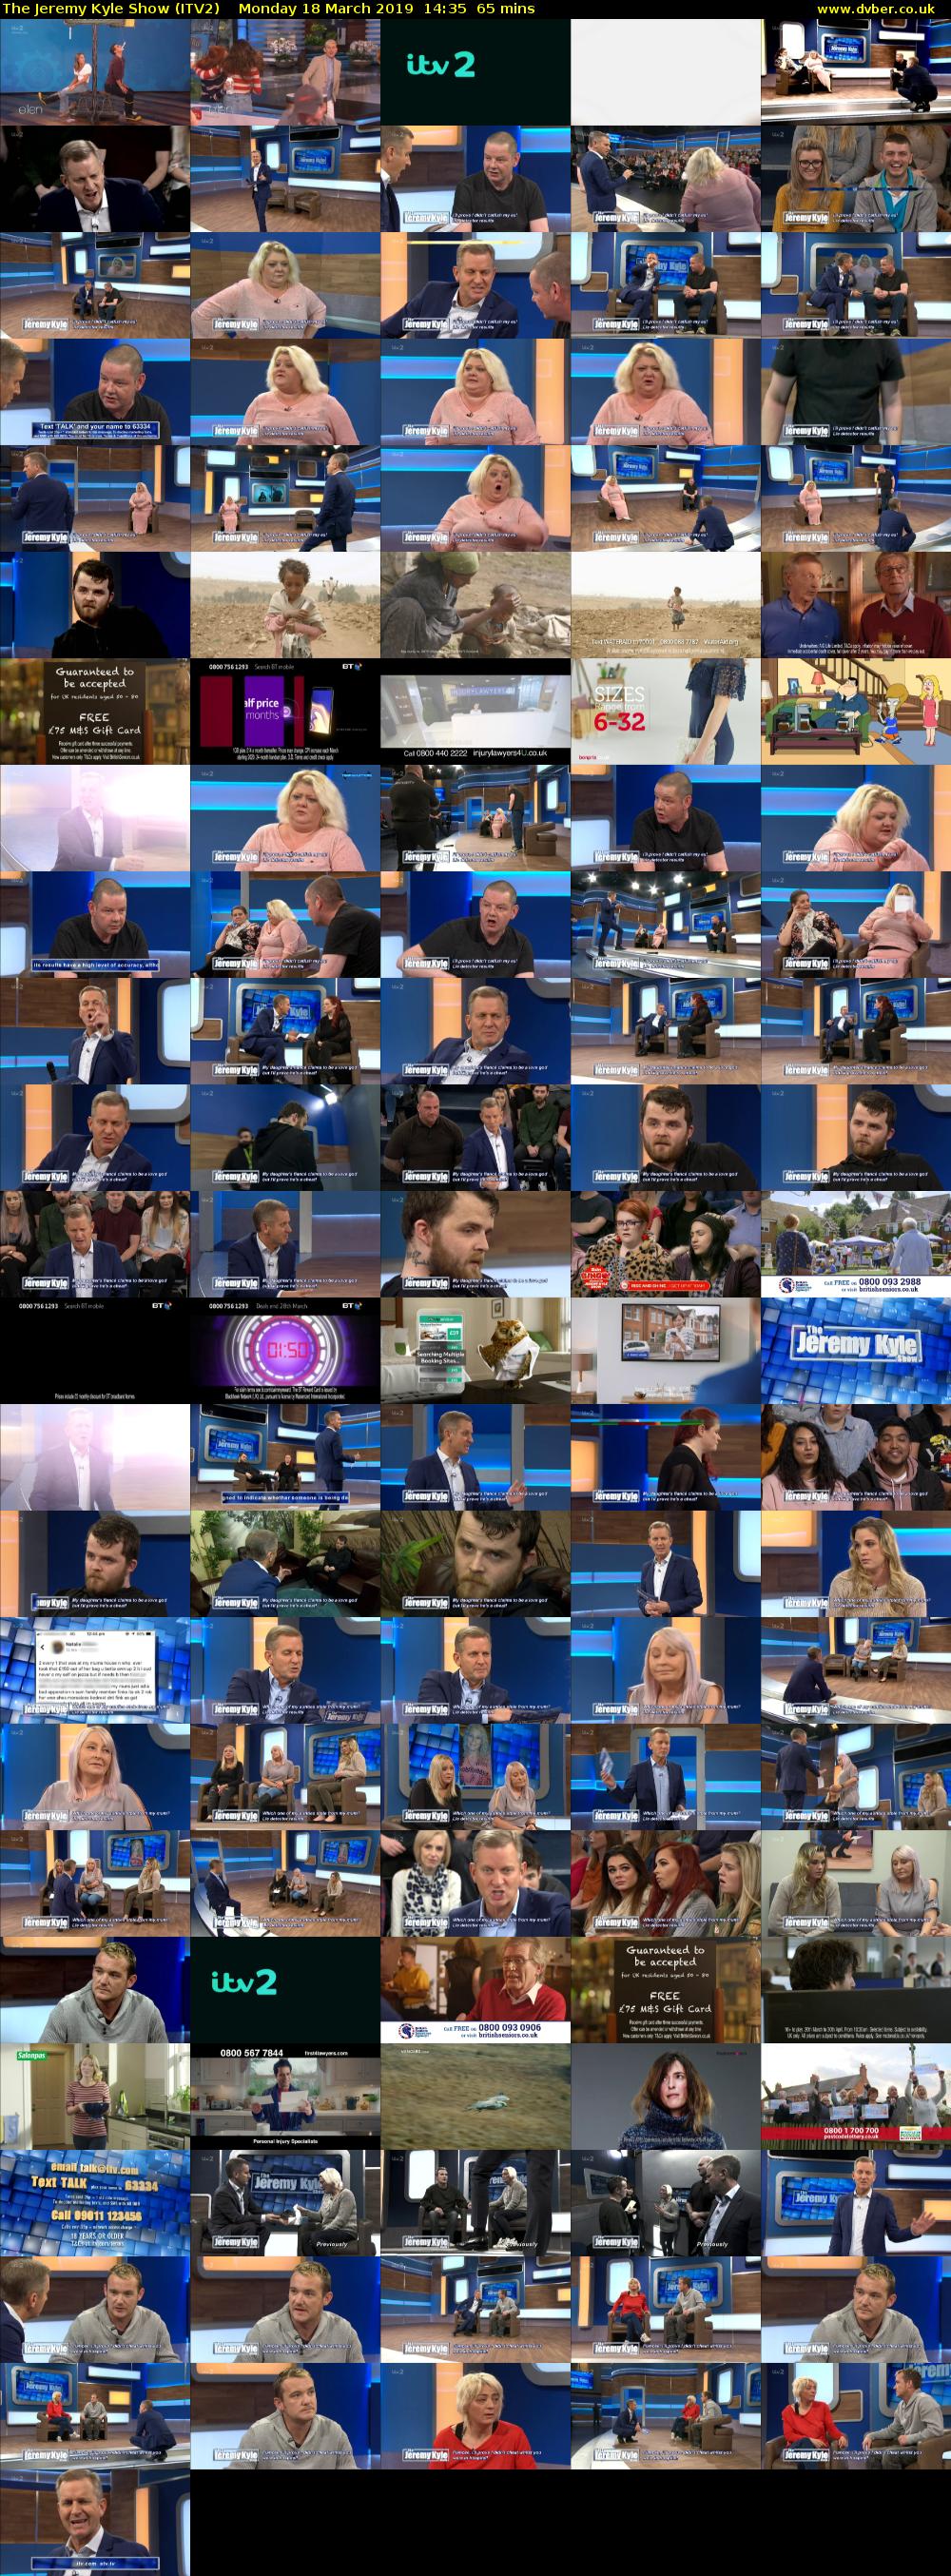 The Jeremy Kyle Show (ITV2) Monday 18 March 2019 14:35 - 15:40